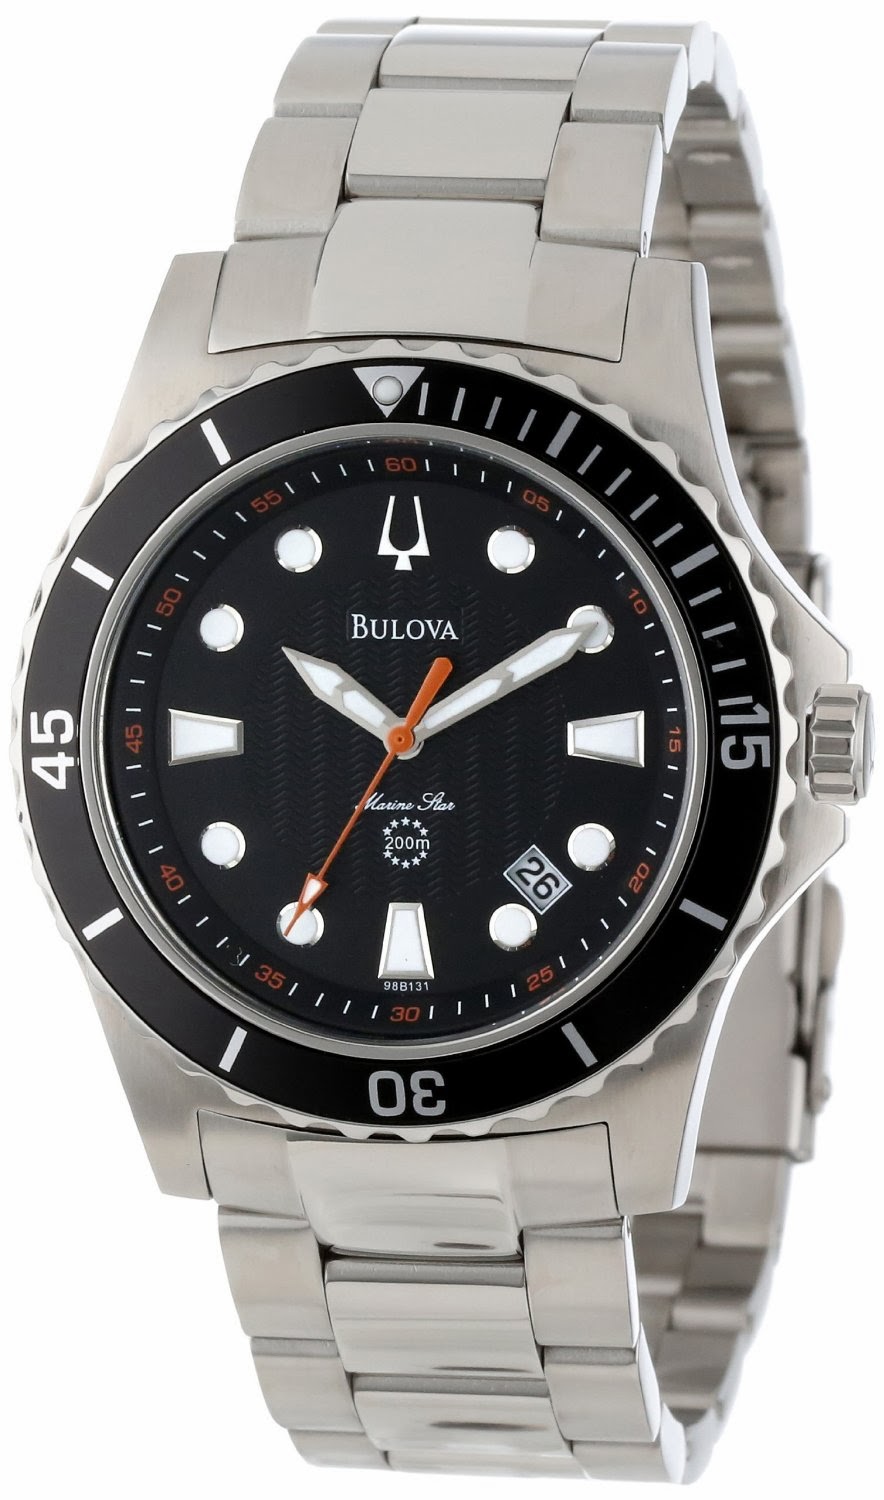 Diver Watch - Bulova 98B131 , Marine Star Black Dial Bracelet Watch ...